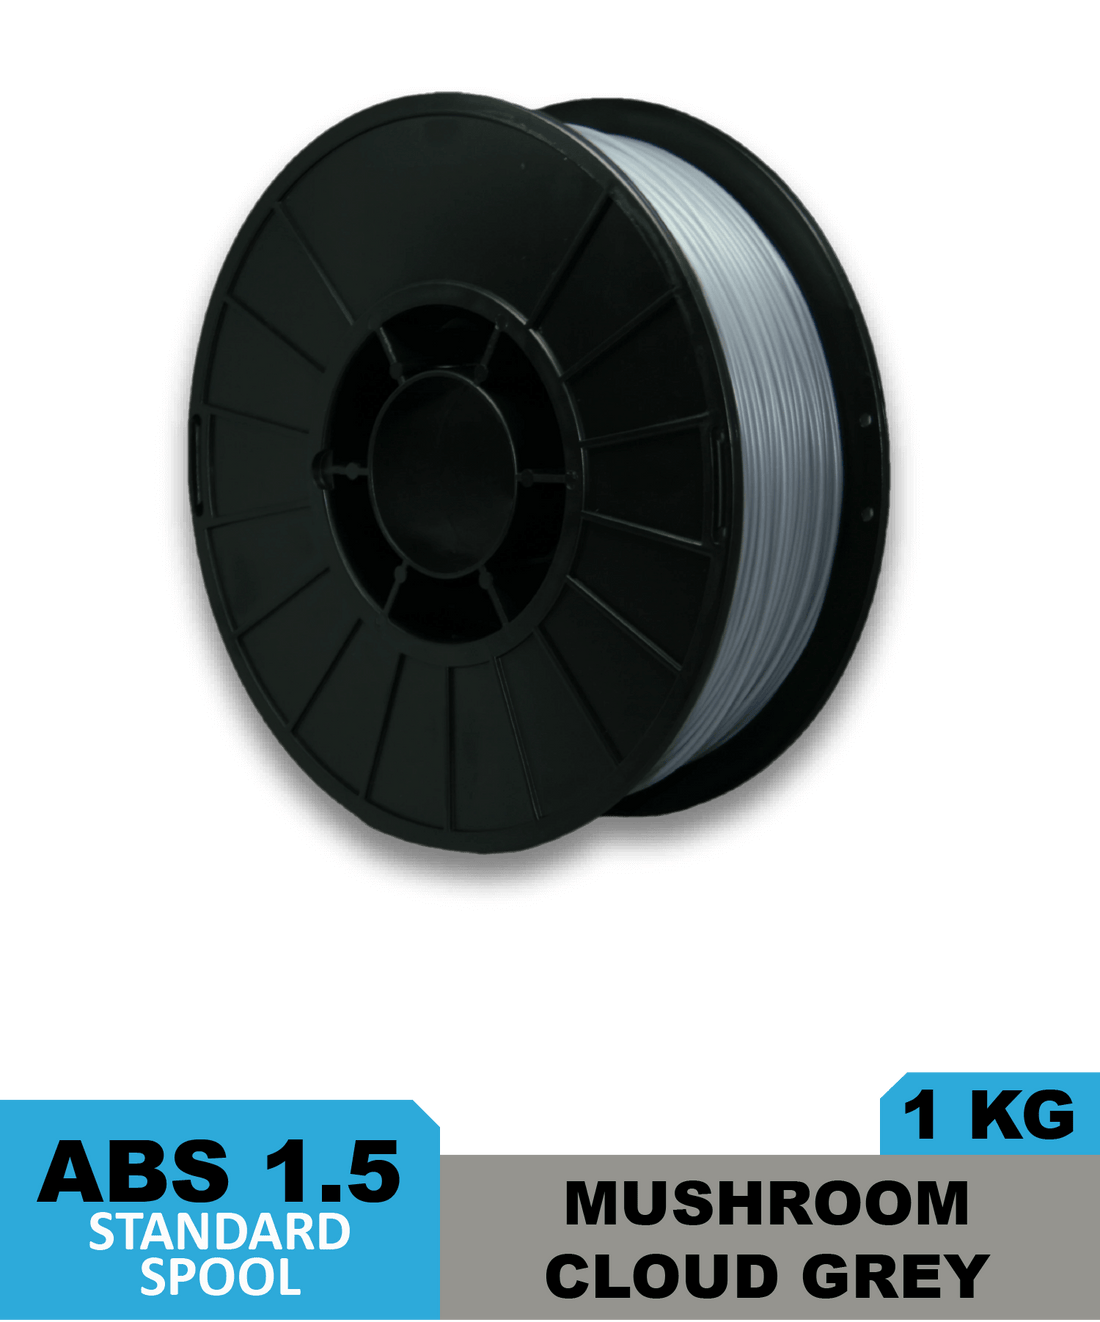 Fusion Filament ABS 1.5 Mushroom Cloud Grey 1KG